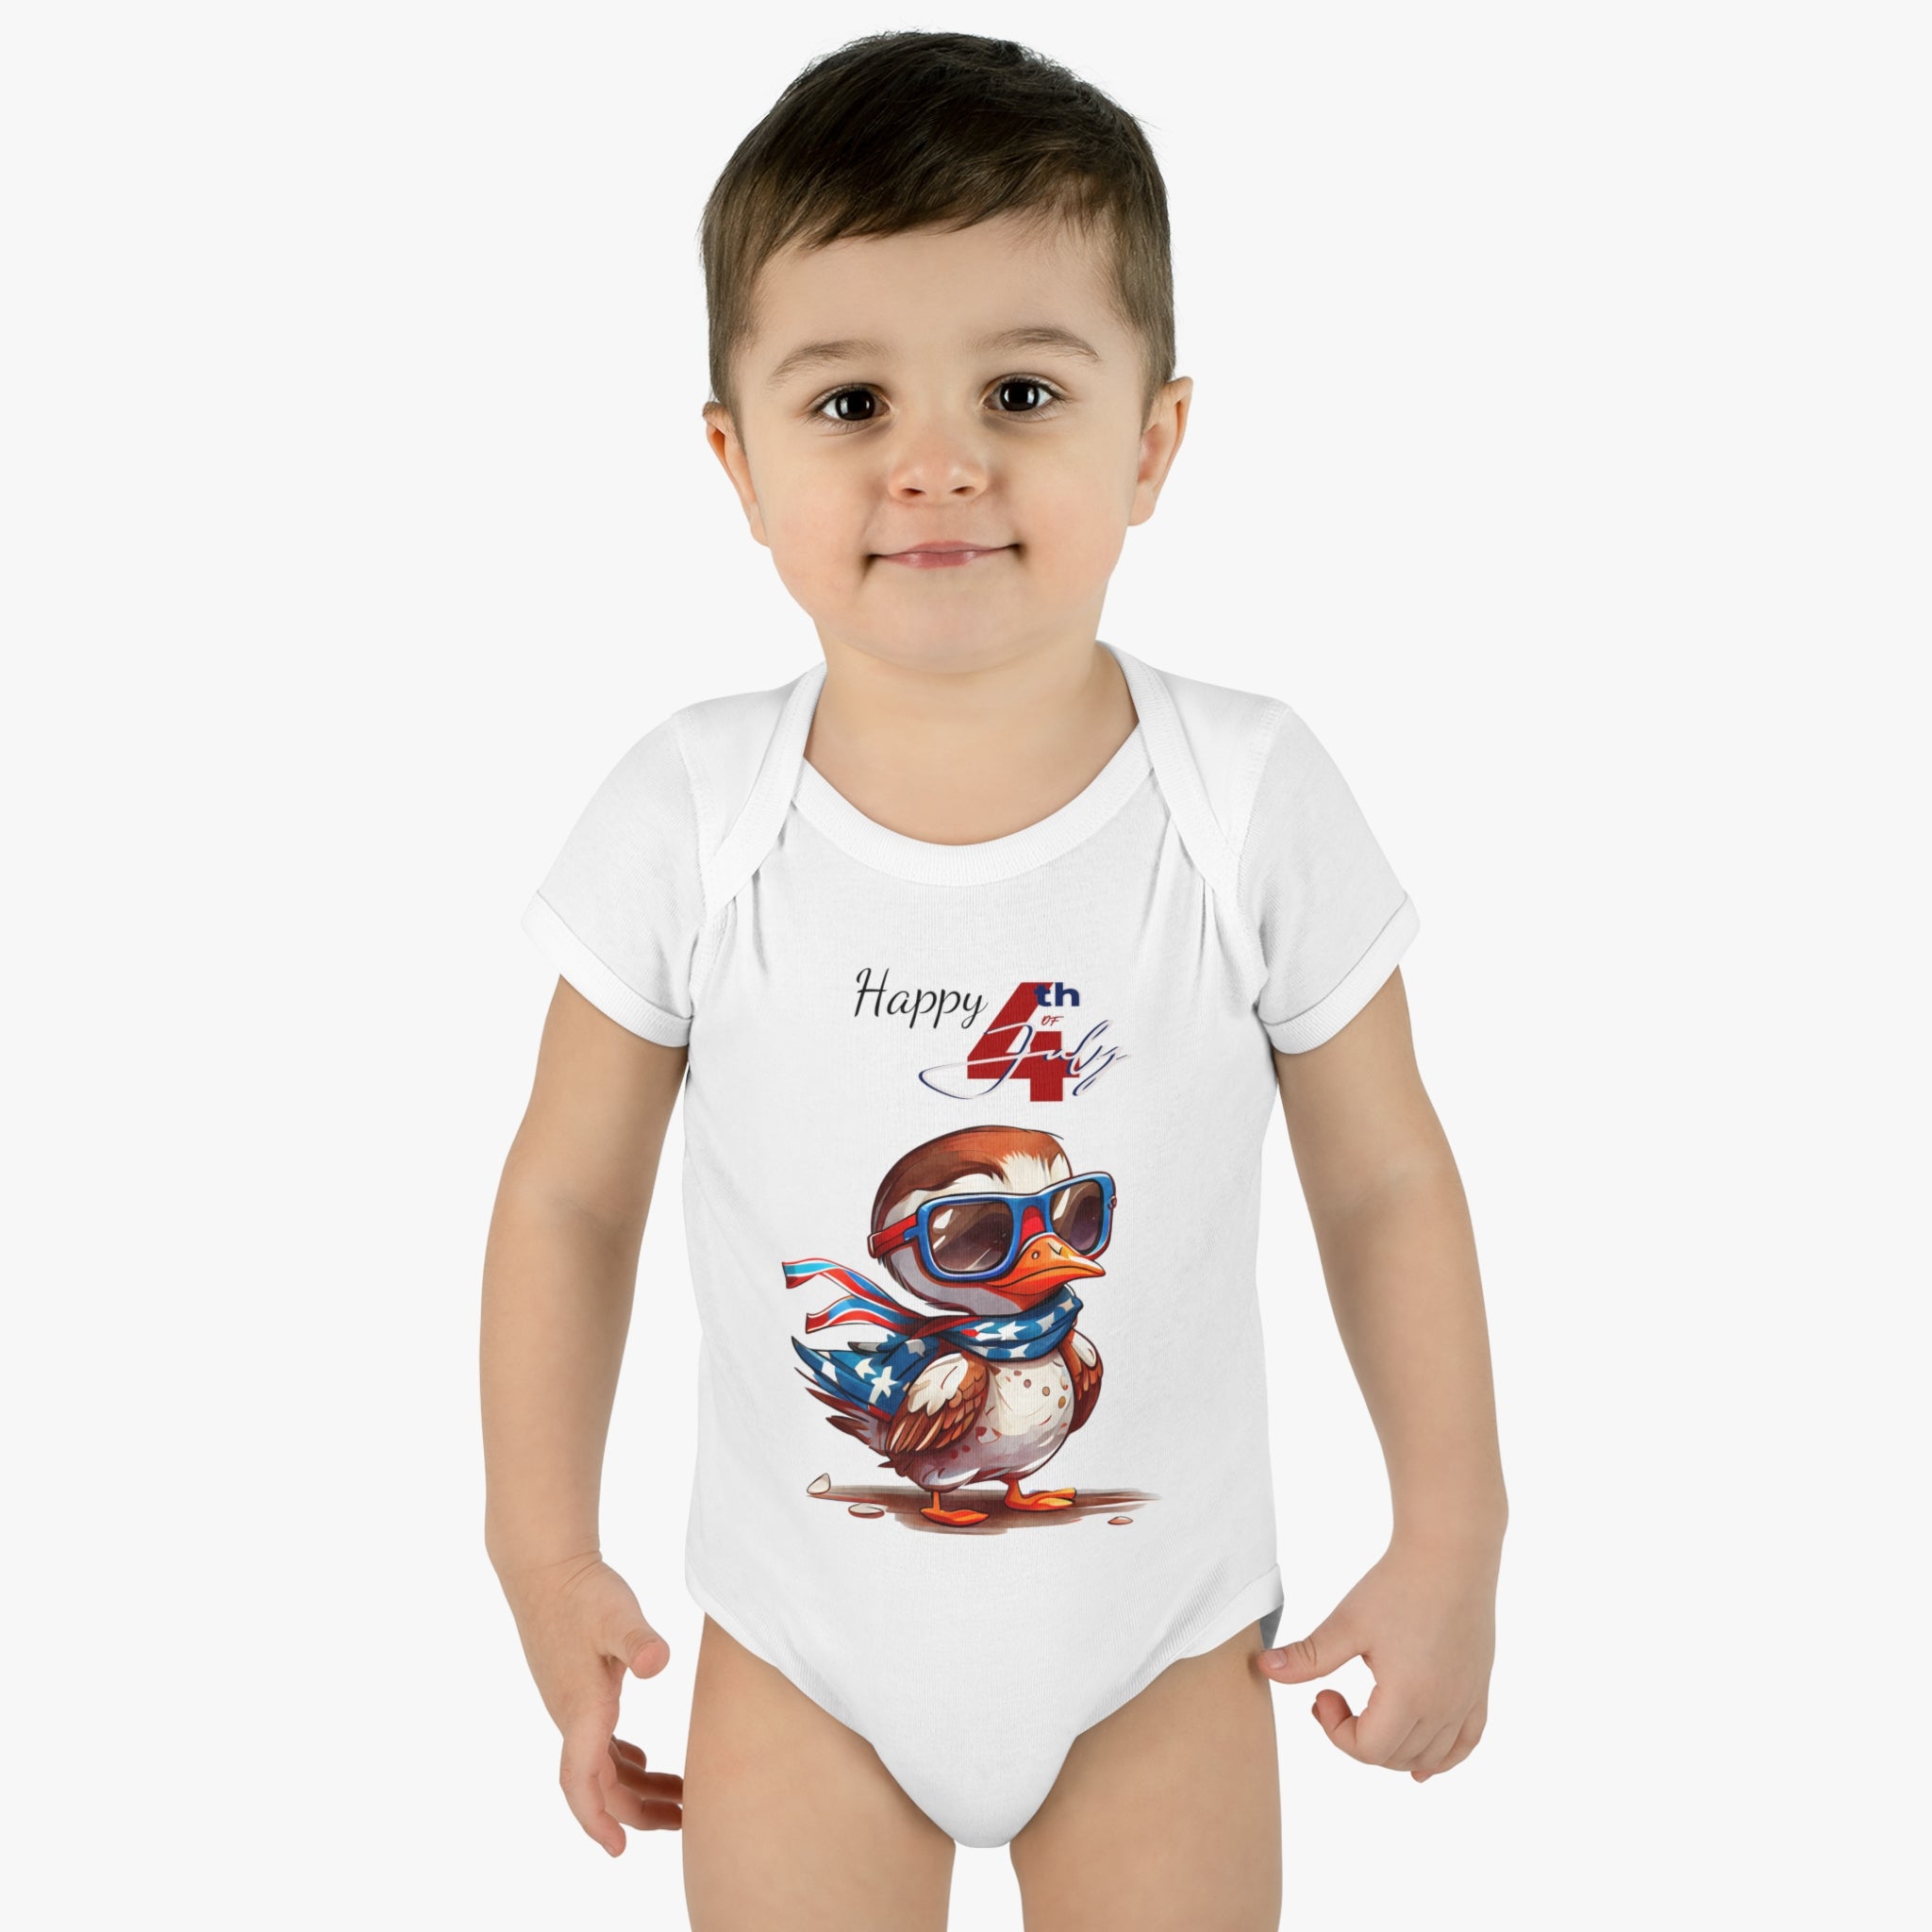 Happy 4th of July Cute Bird Design Baby Bodysuit